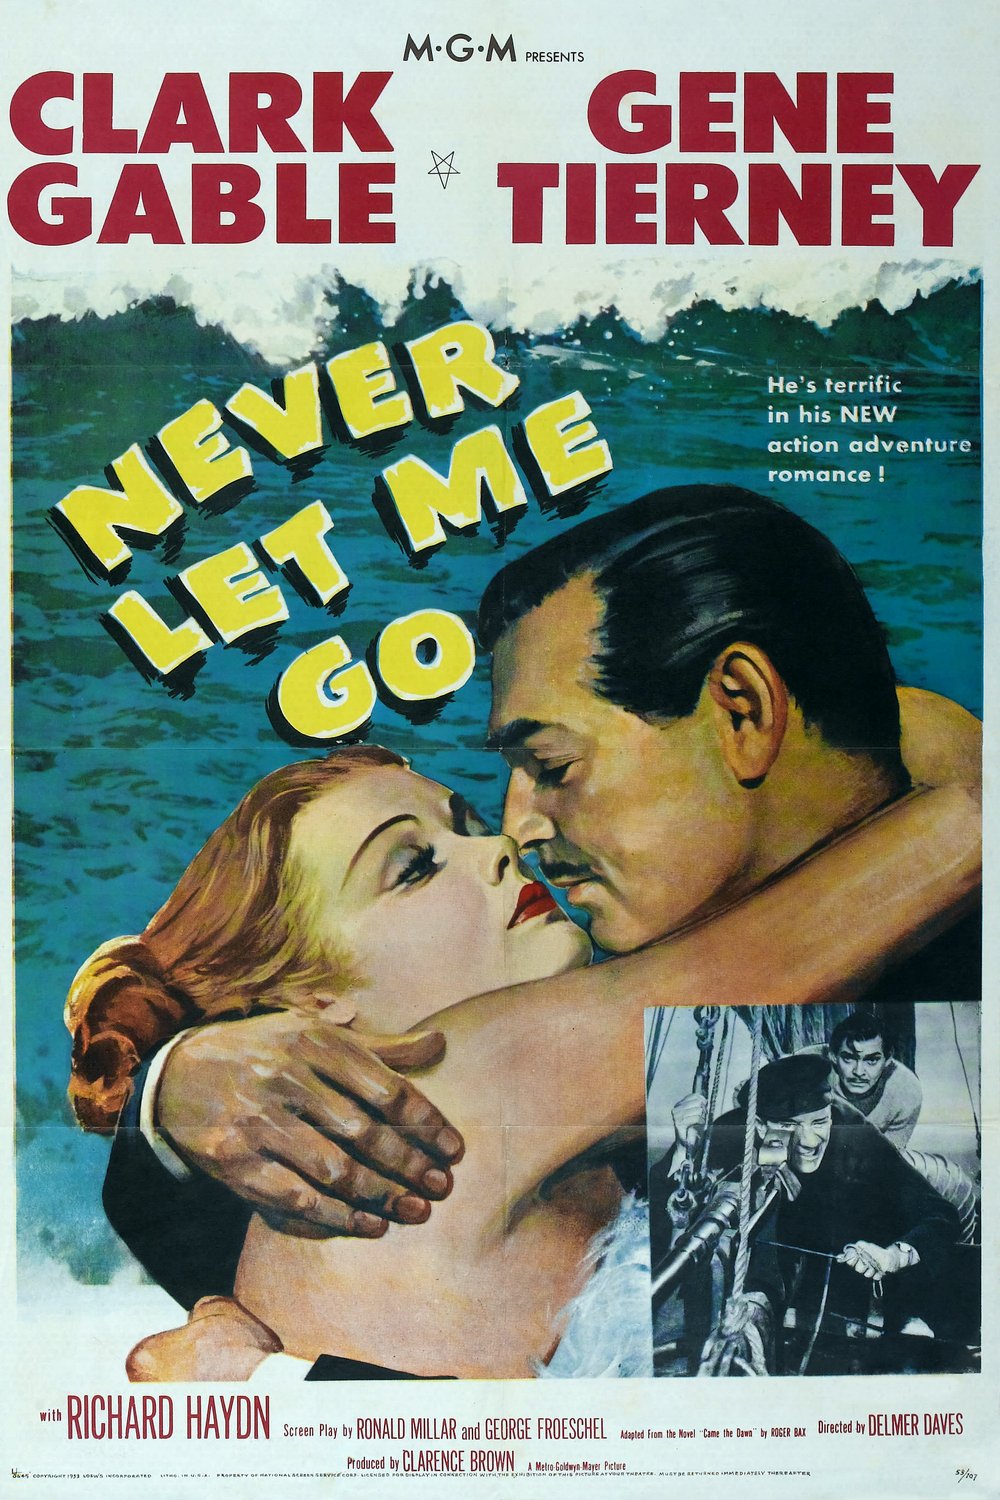 L'affiche du film Never Let Me Go